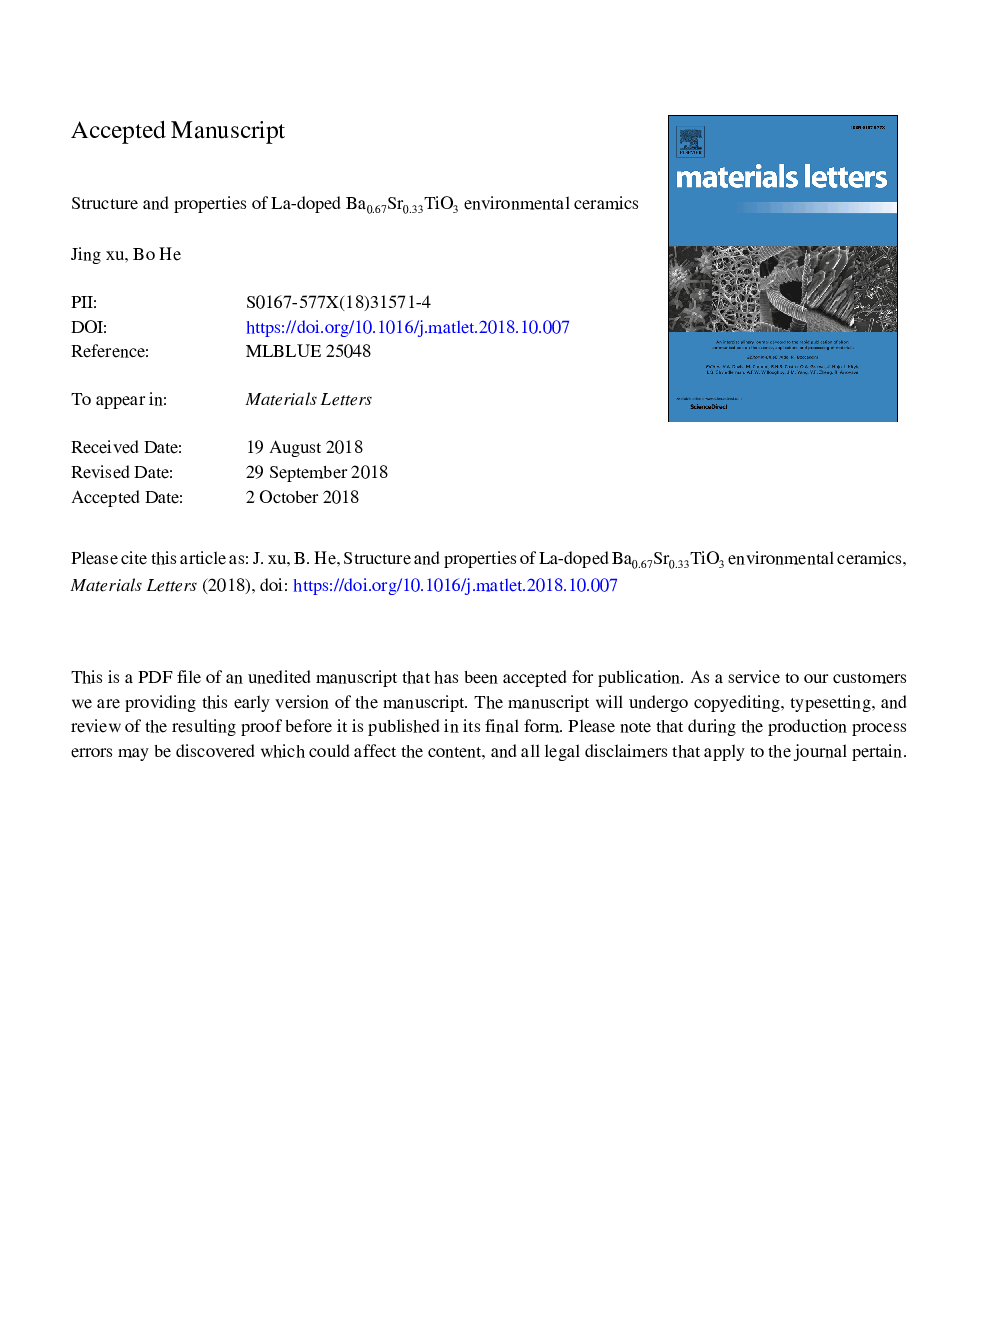 Structure and properties of La-doped Ba0.67Sr0.33TiO3 environmental ceramics